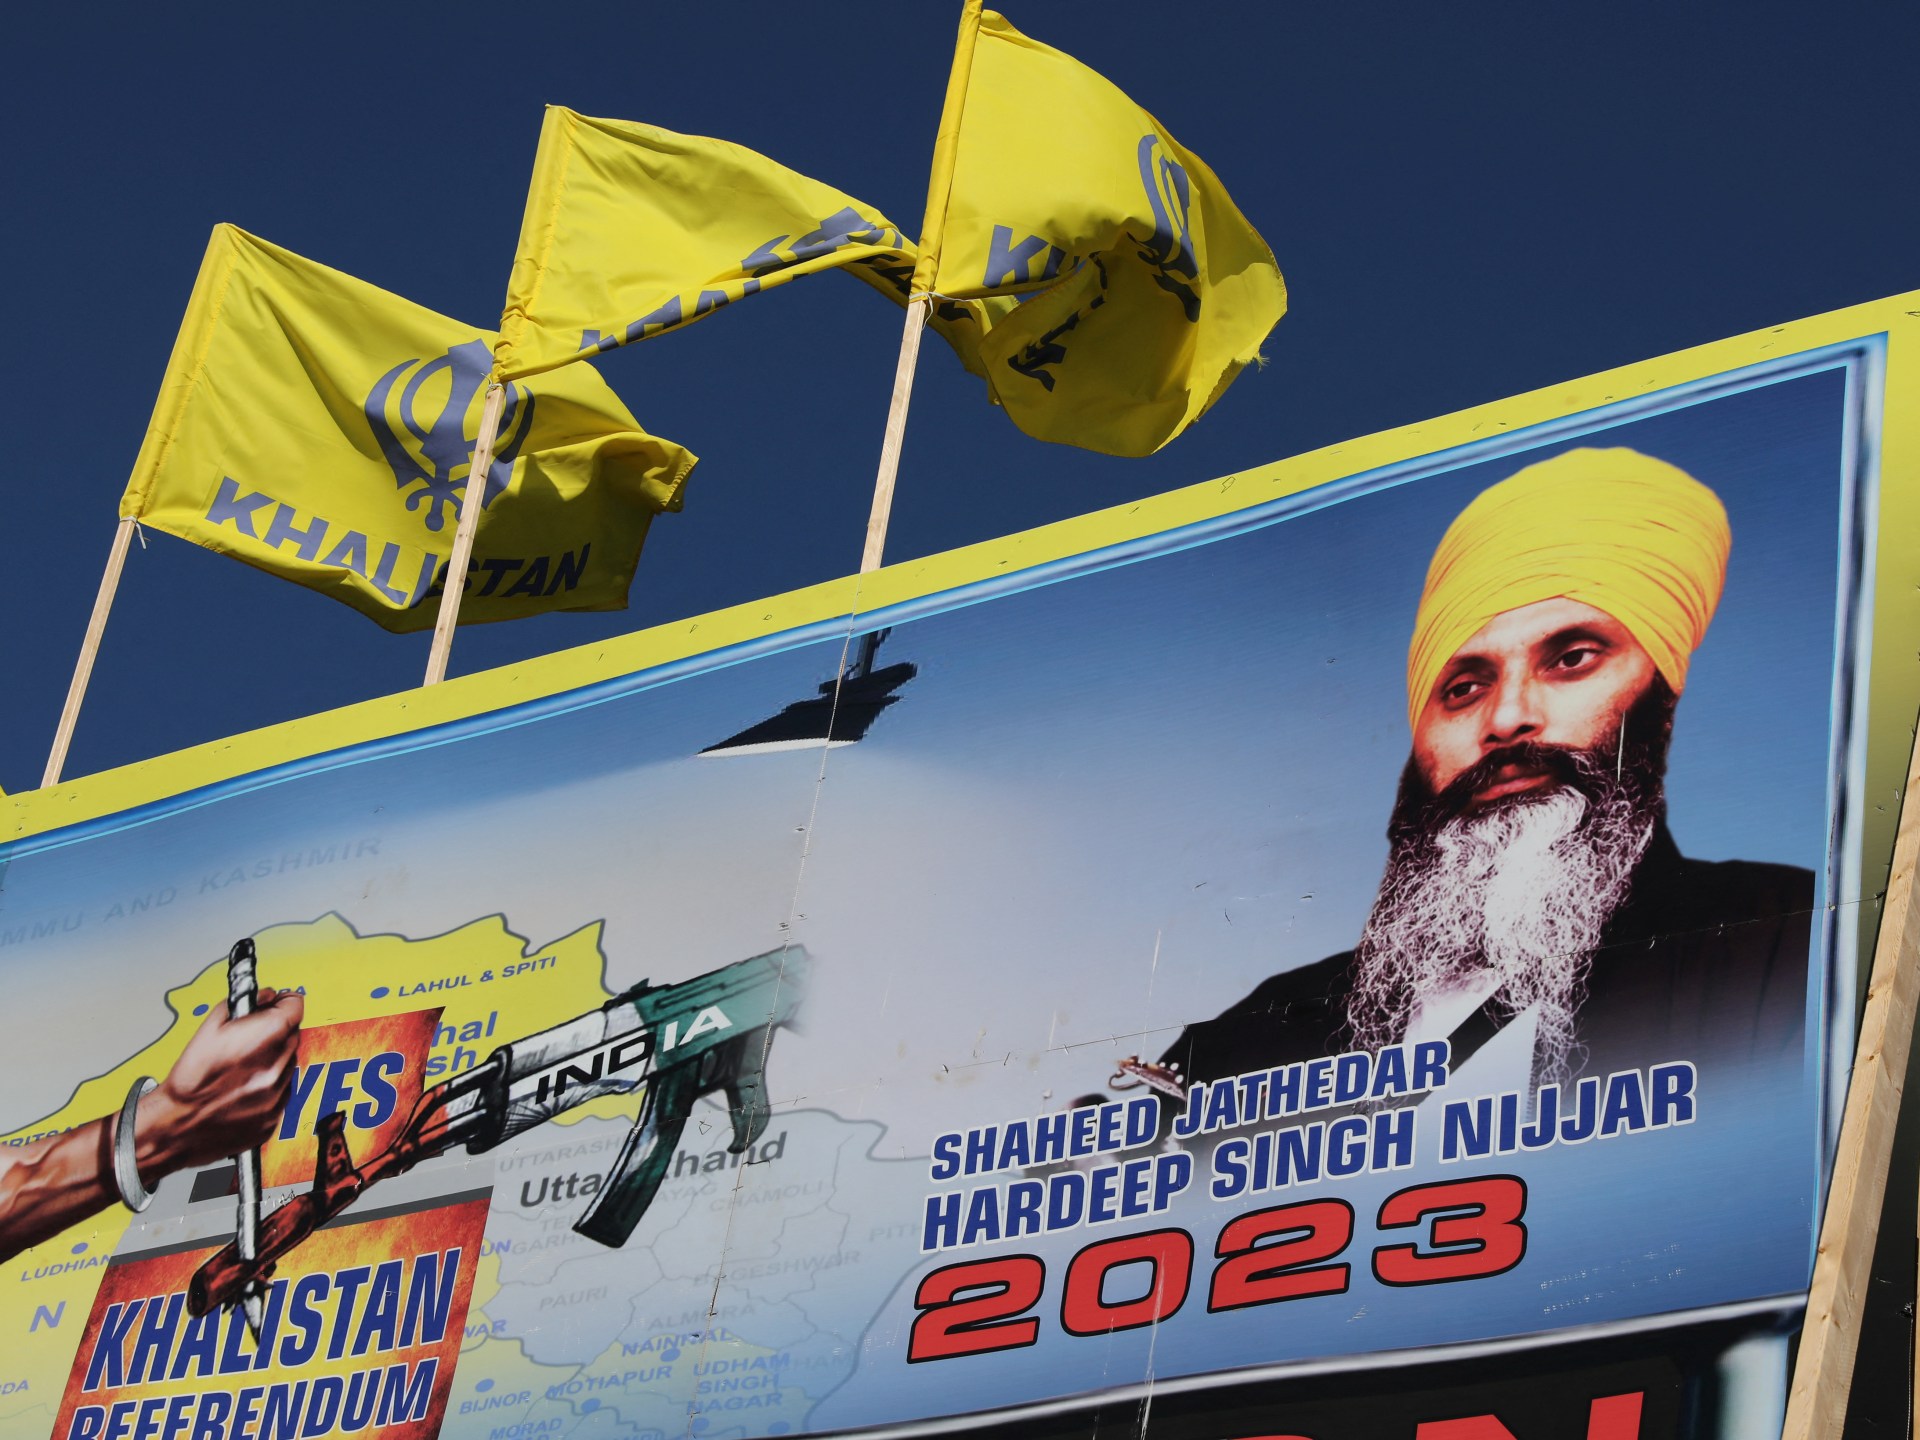 India calls Canada’s arrest in killing of Sikh activist ‘political necessity’ |  New policies